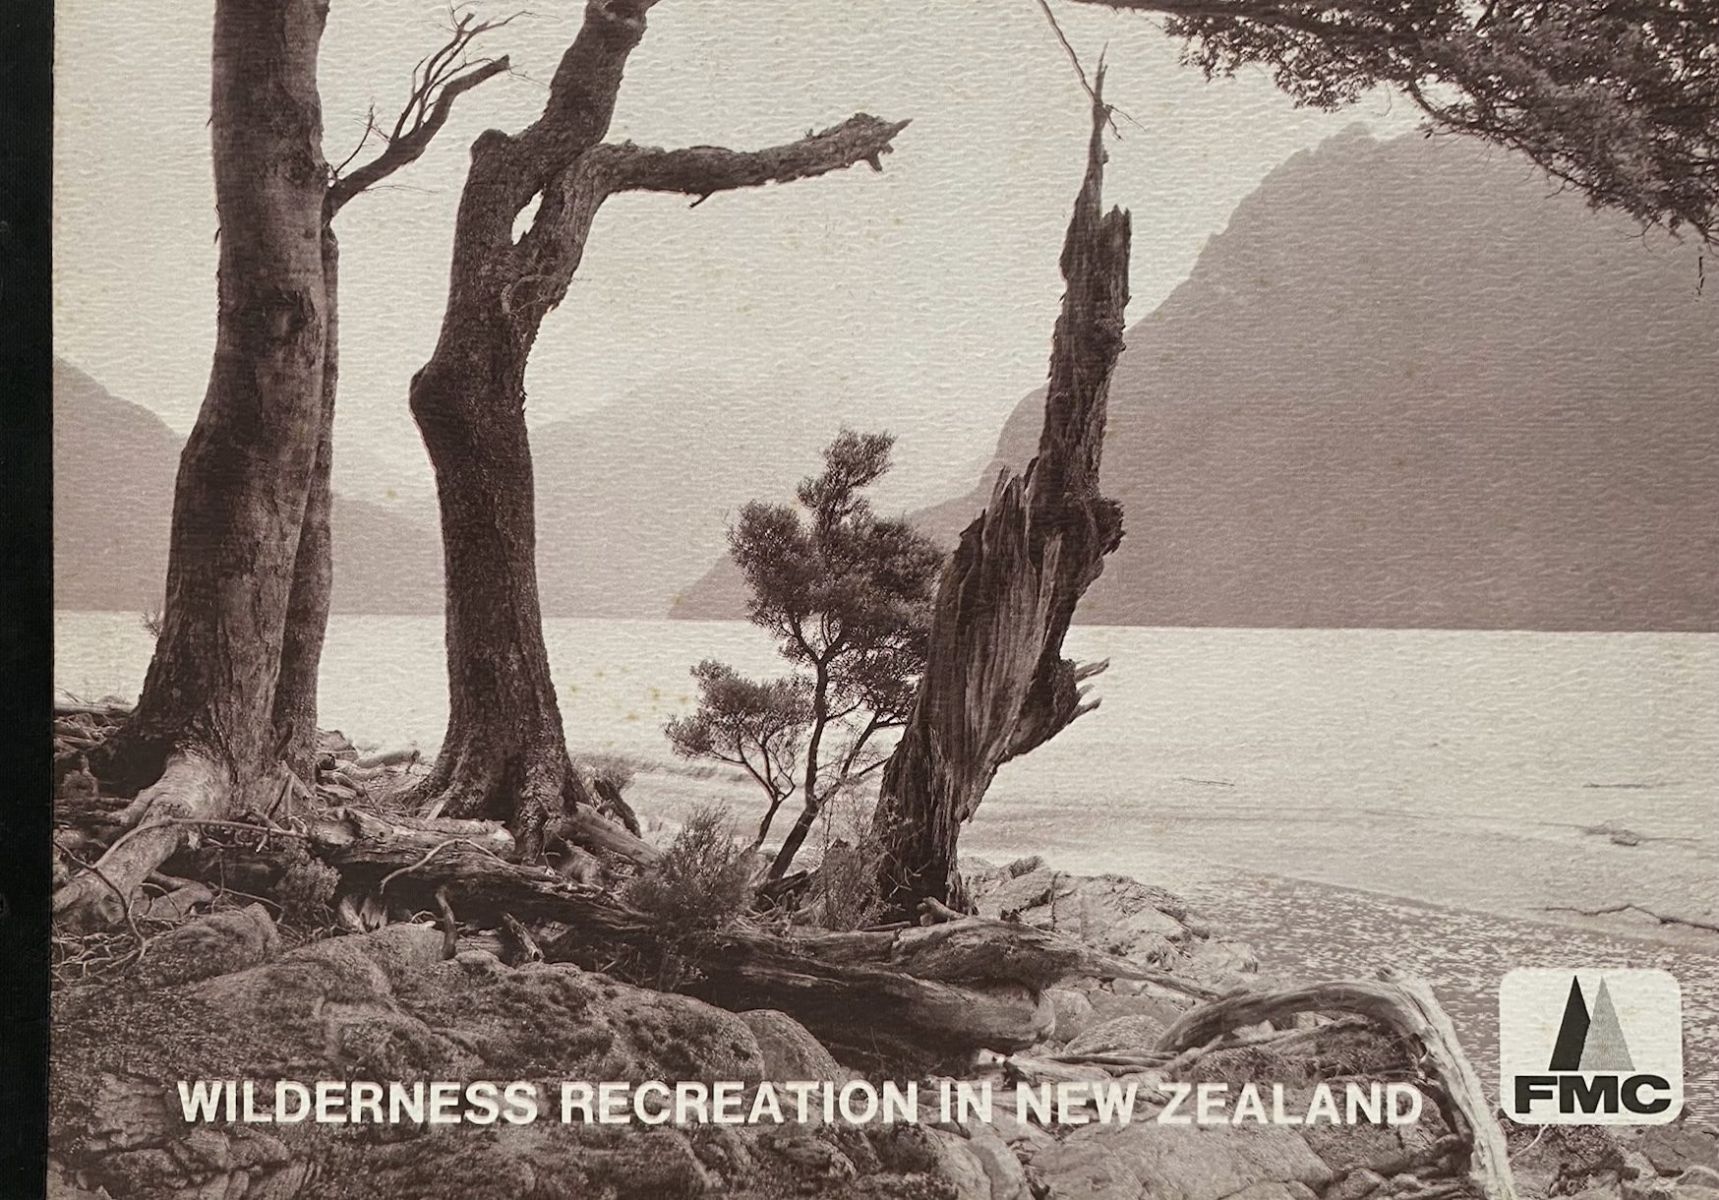 WILDERNESS RECREATION IN NEW ZEALAND